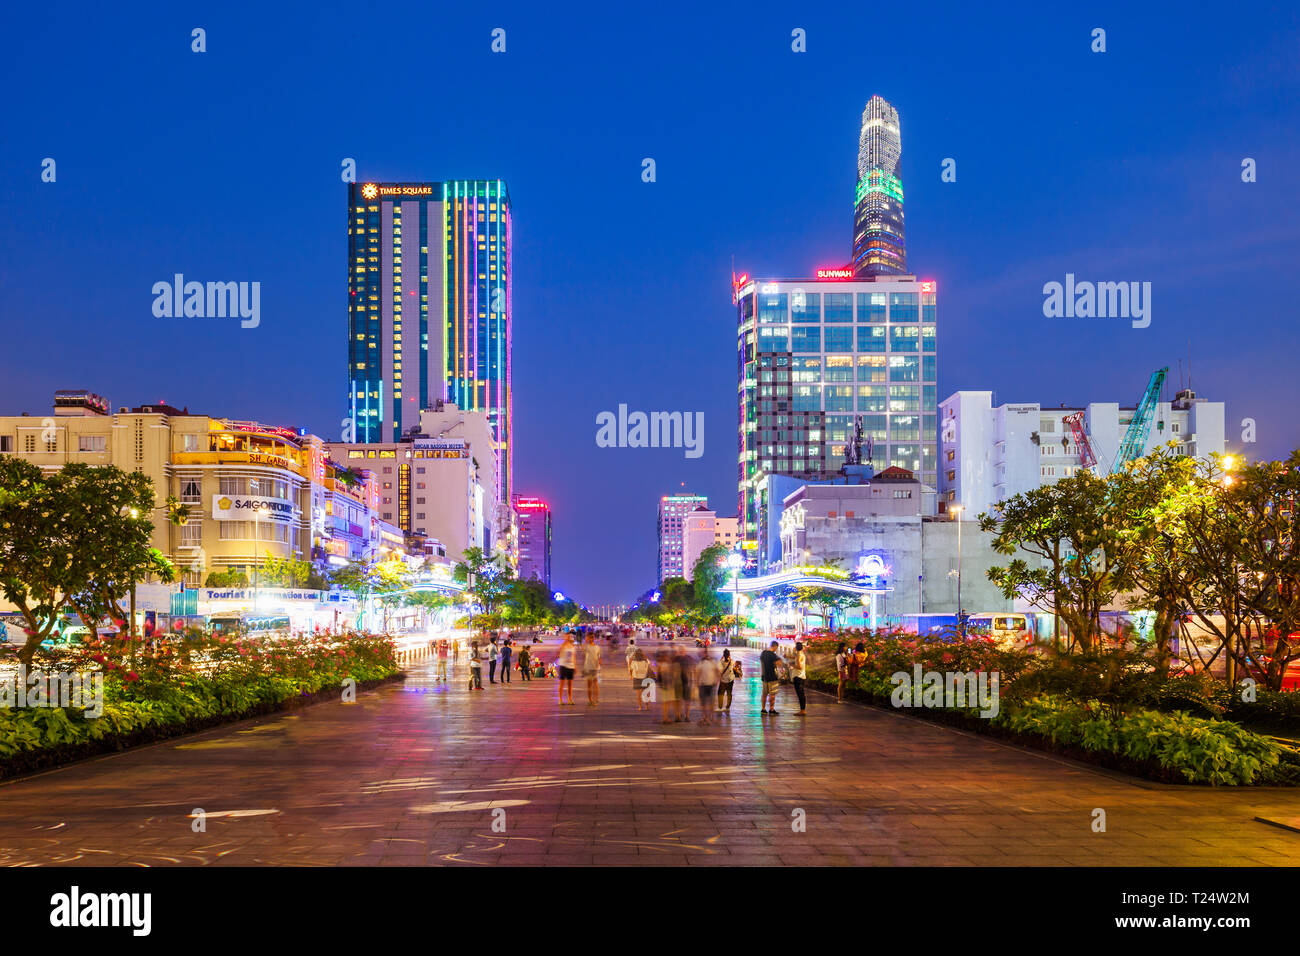 HO CHI MINH, VIETNAM - MÄRZ 08, 2018: Ho Chi Minh City Skyline bei Nacht. Ho Chi Minh City ist die grösste Stadt in Vietnam. Stockfoto